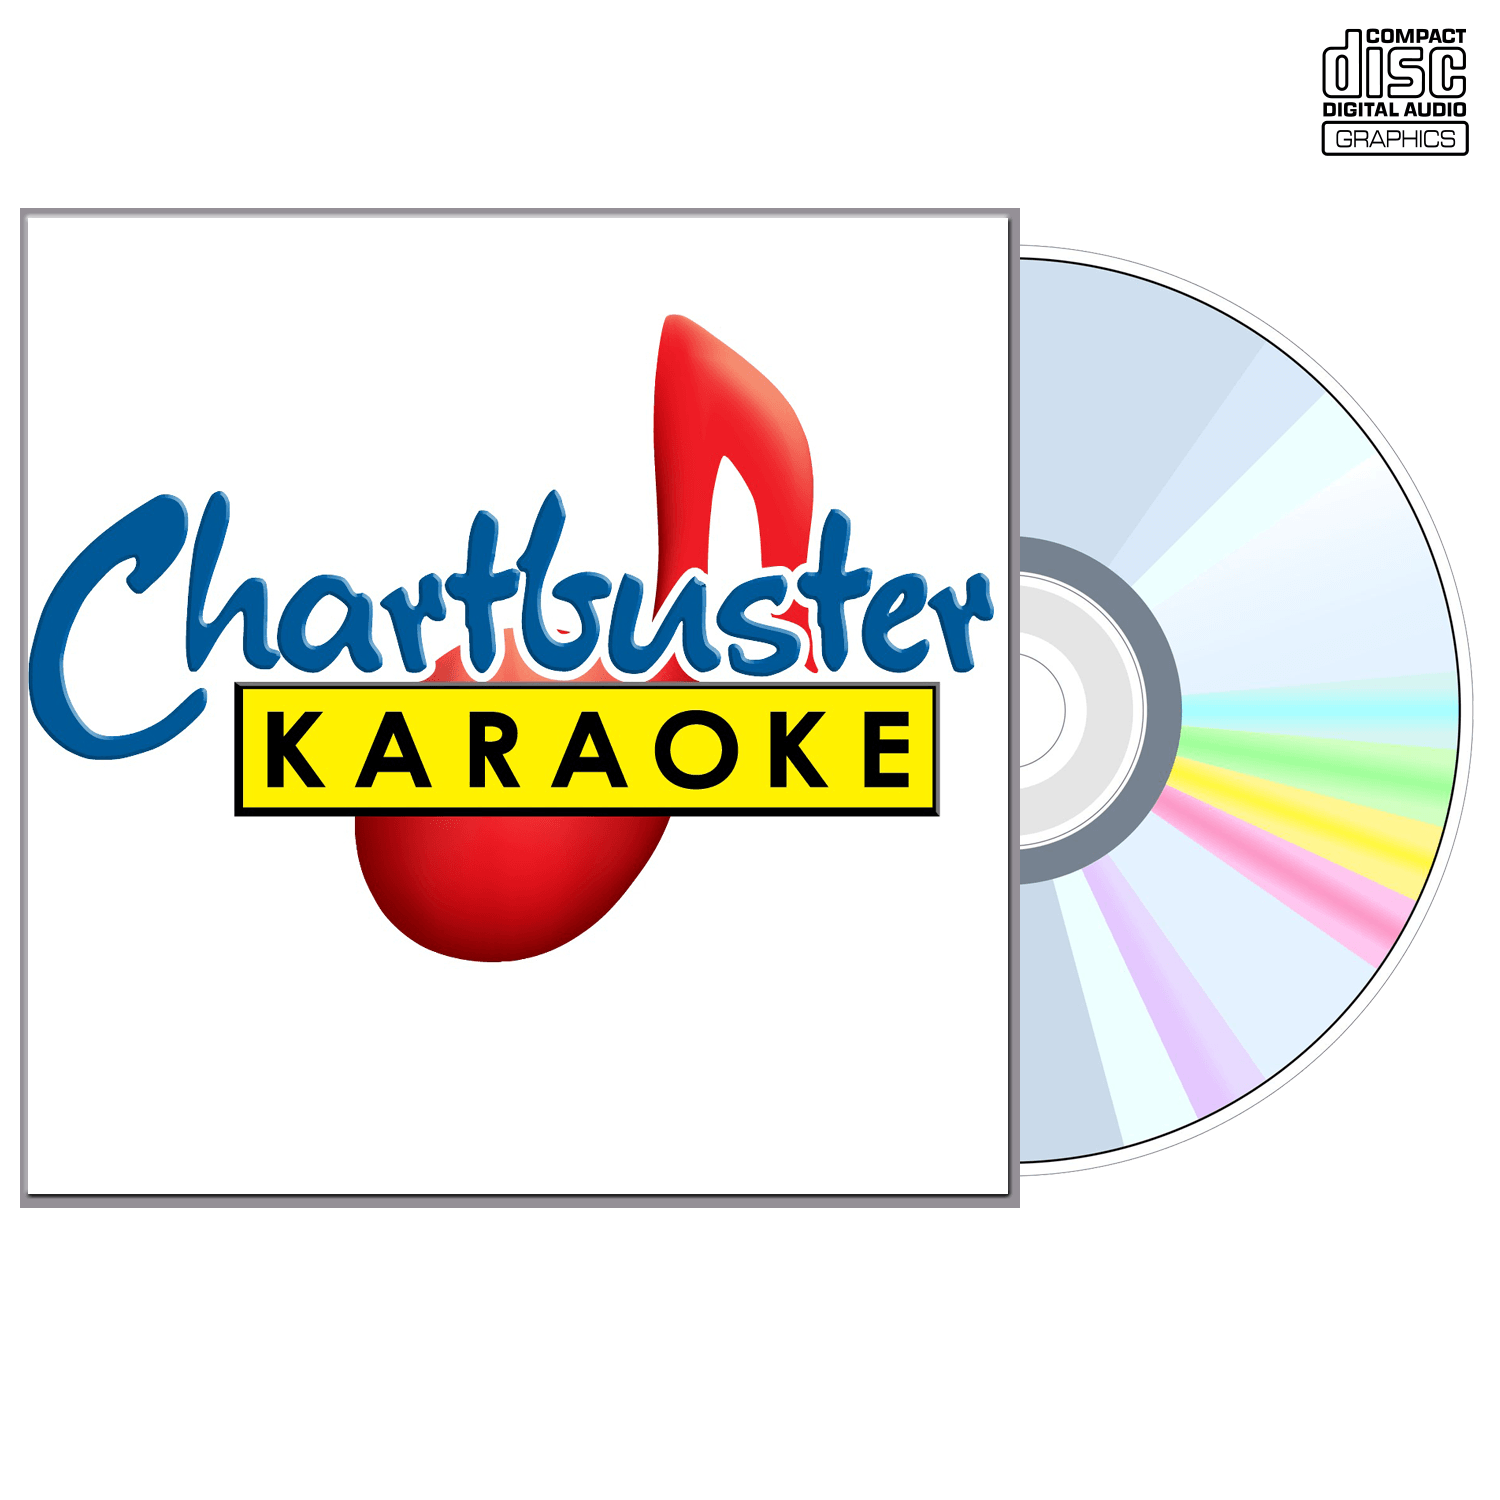 Martina Mcbride Vol 4 - CD+G - Chartbuster Karaoke - Karaoke Home Entertainment